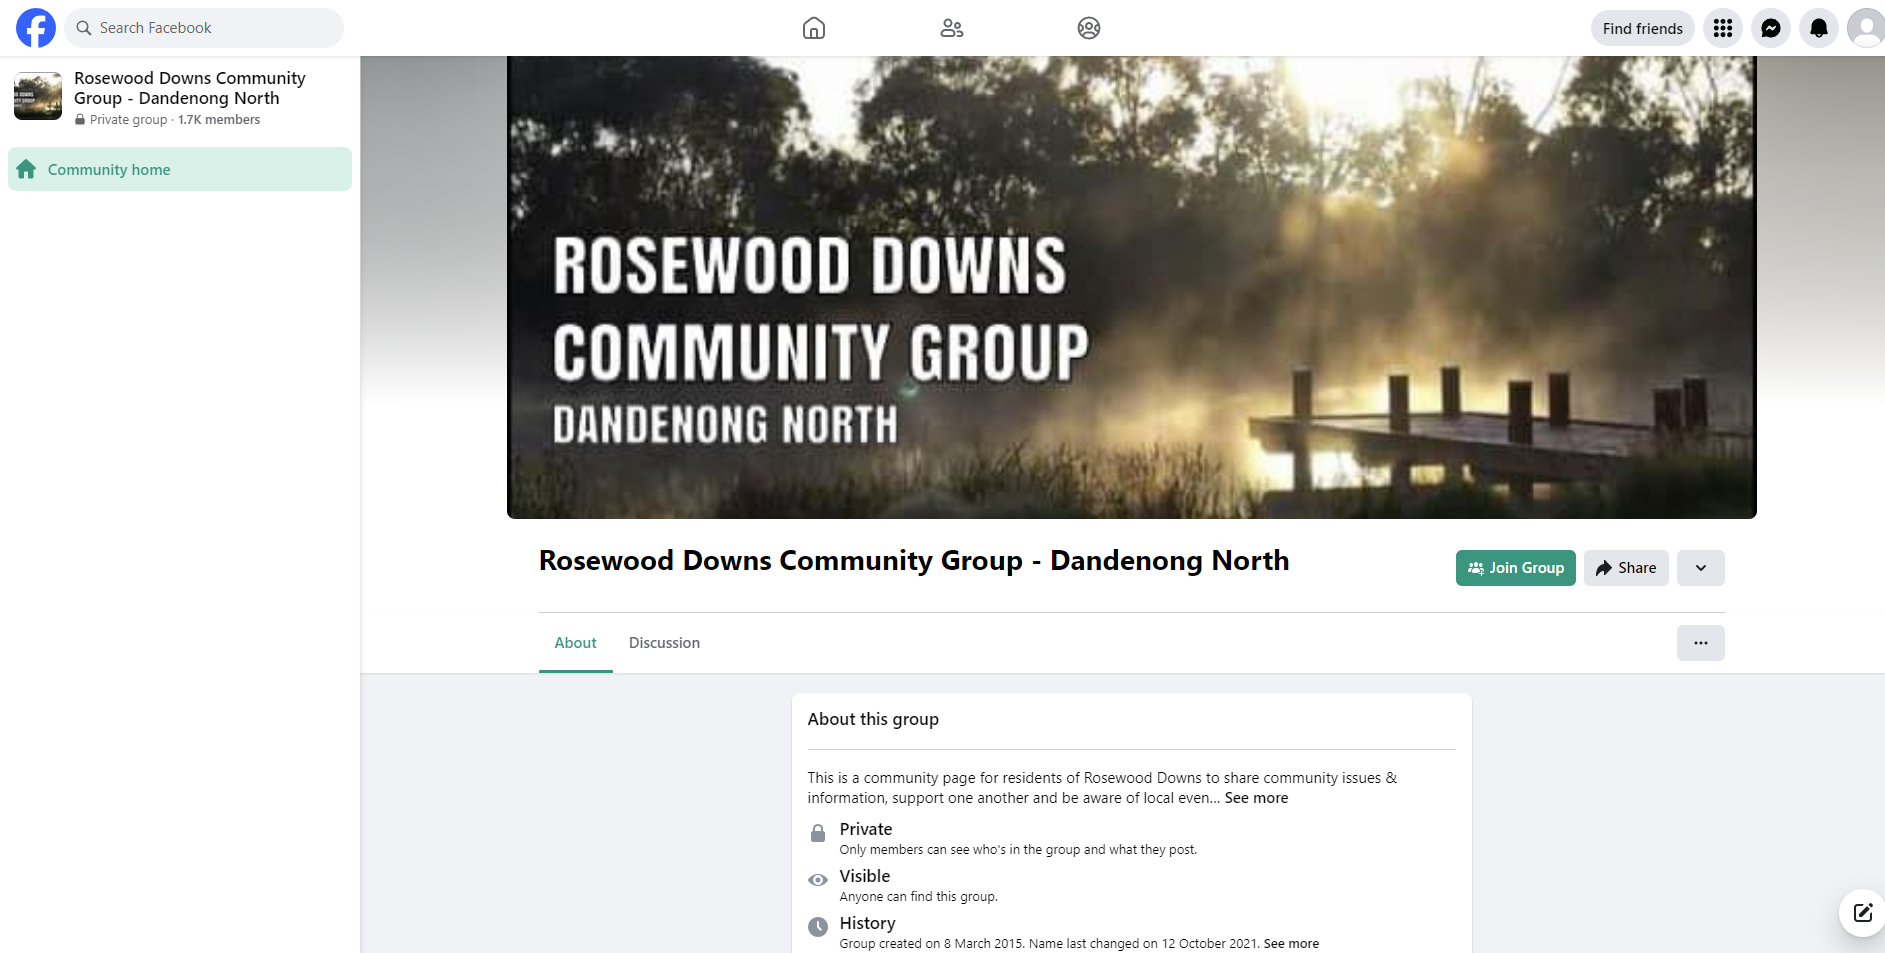 Rosewood Downs Community Group - Dandenong North